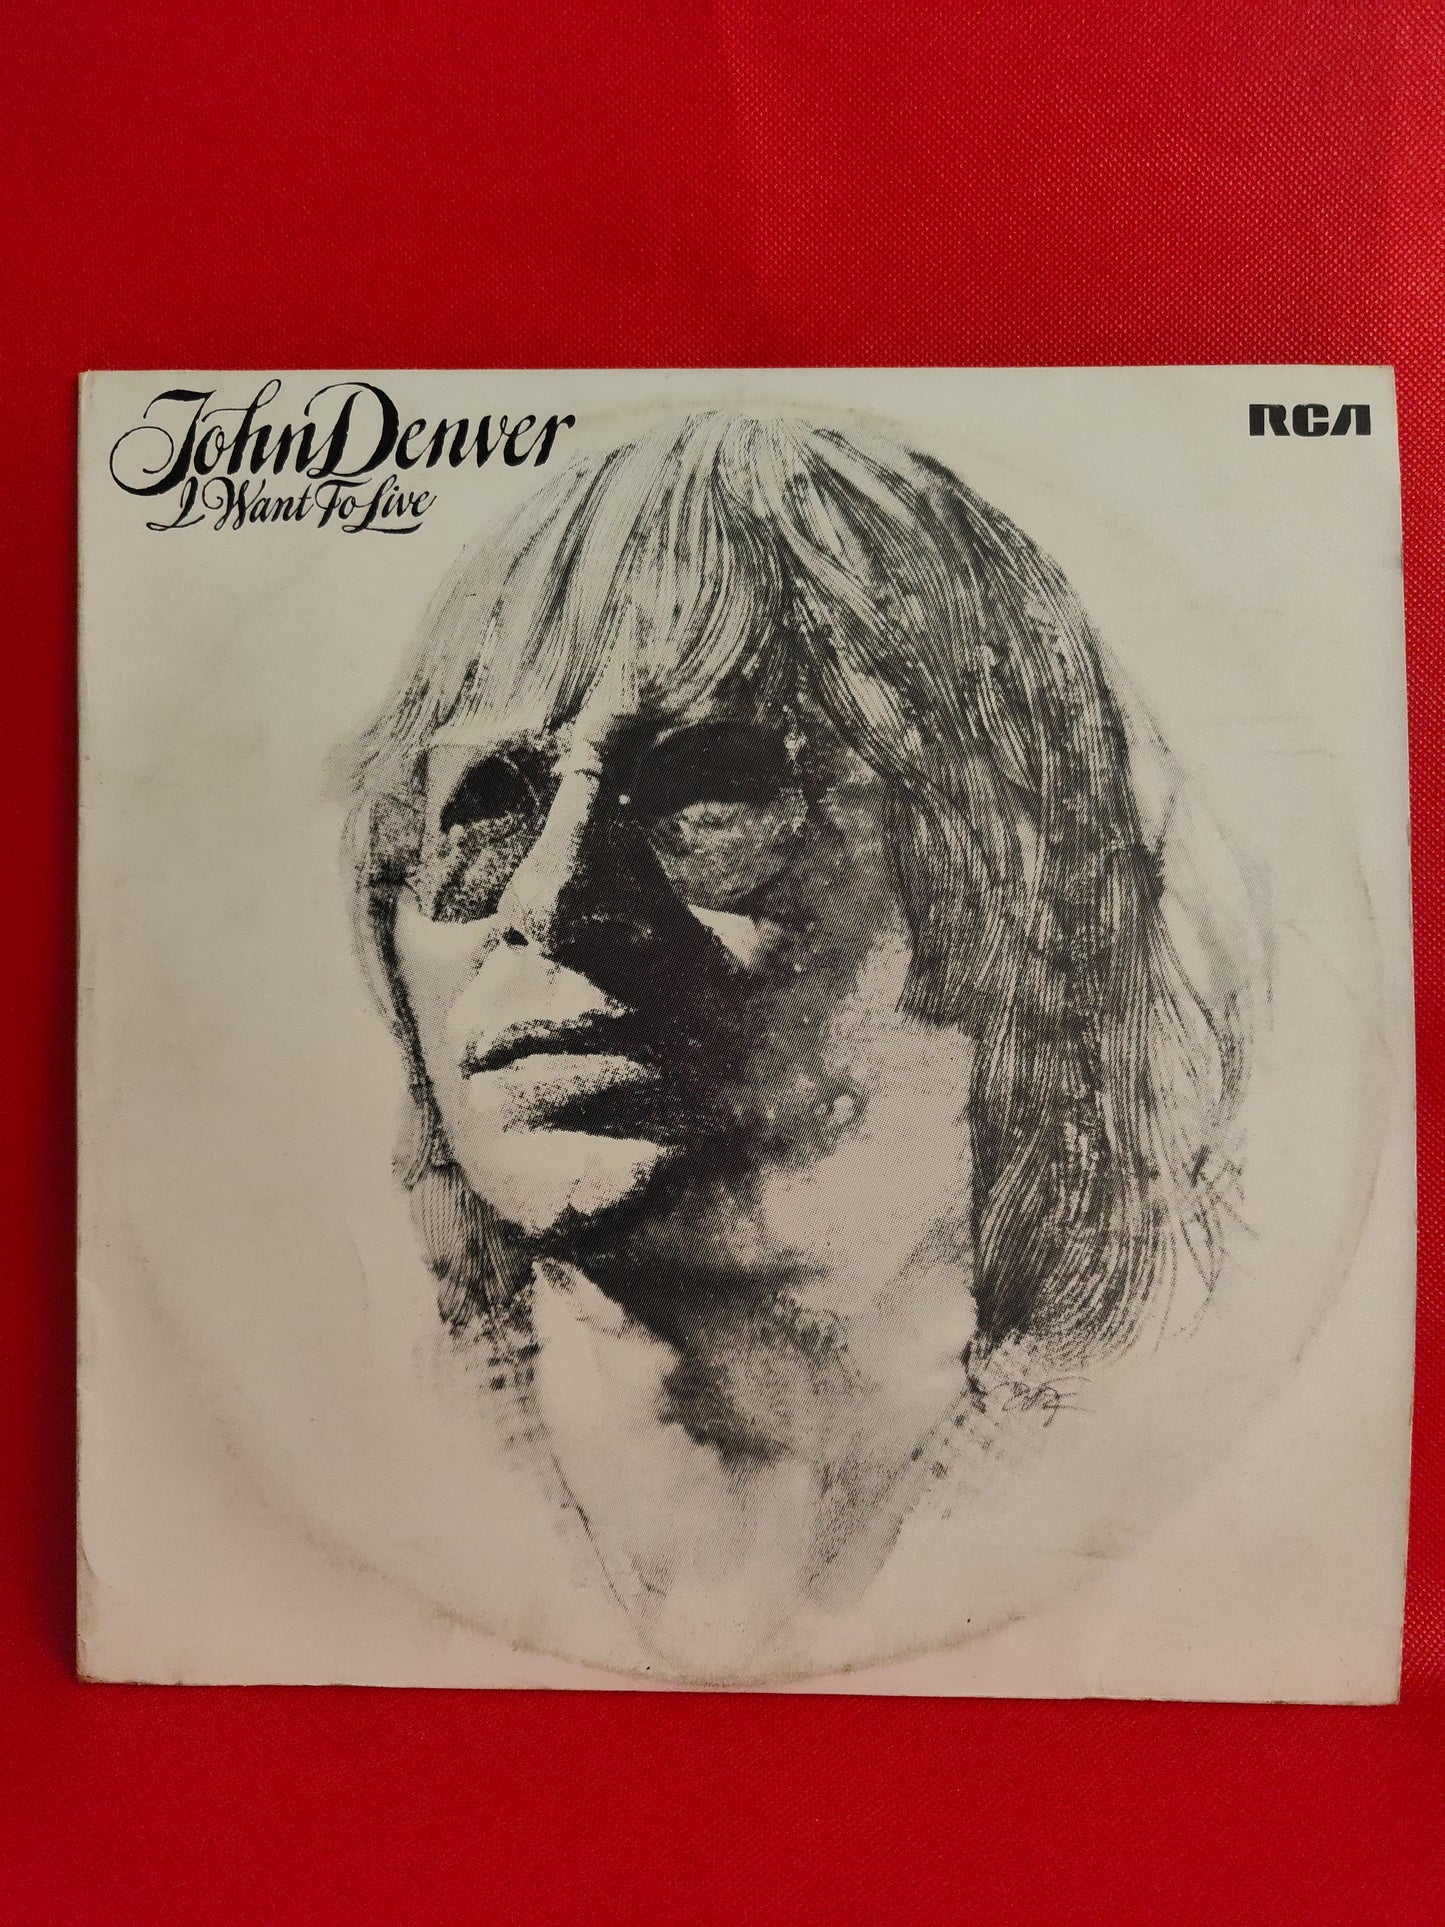 JOHN DENVER - I Want to Live